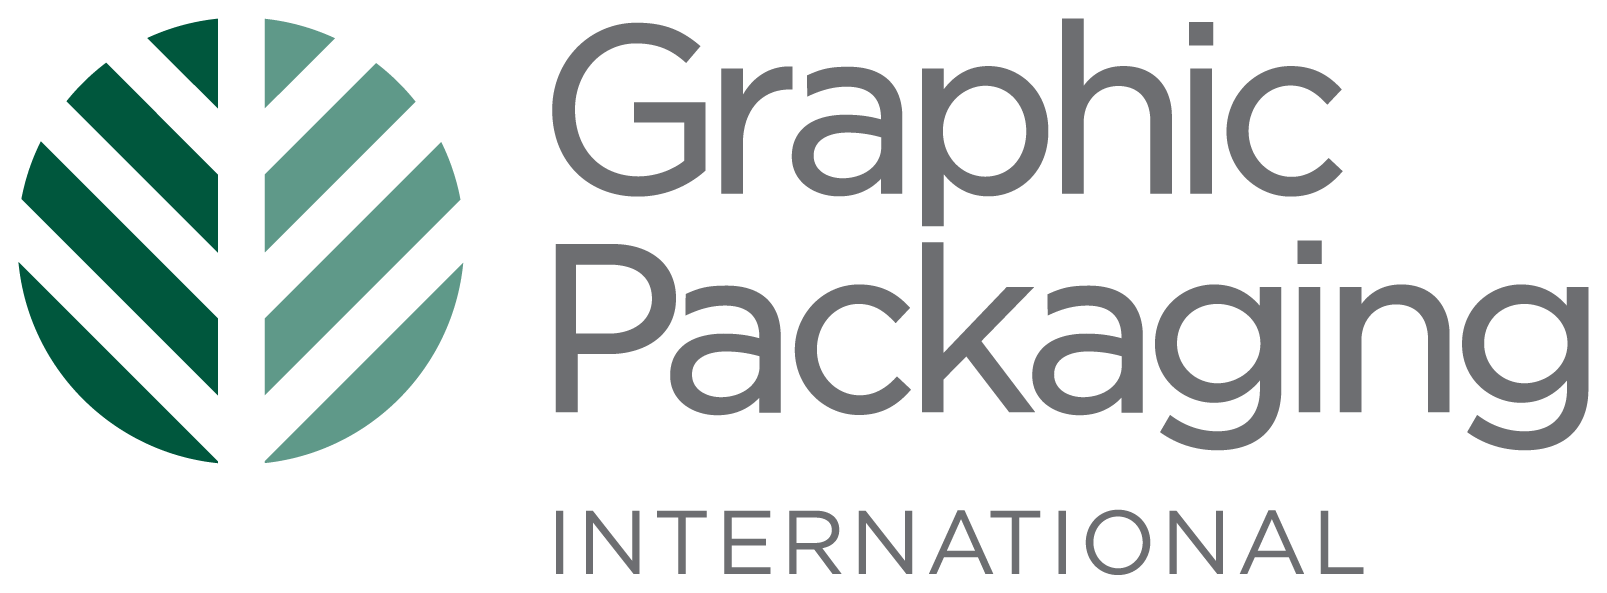 GPI_Graphic Packaging International